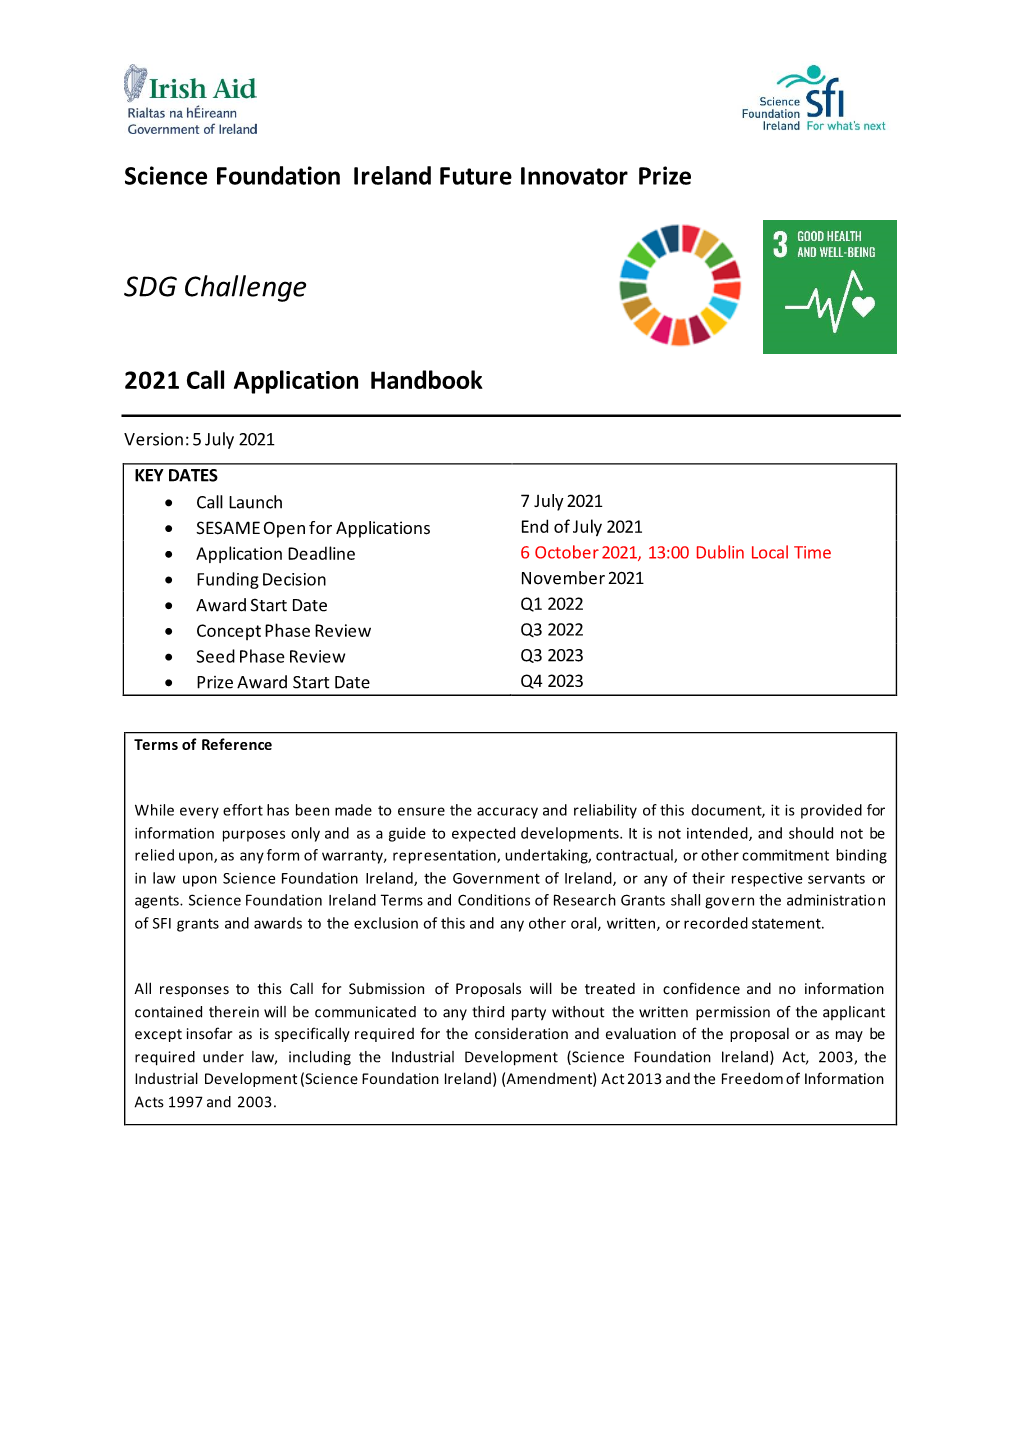 SDG Challenge